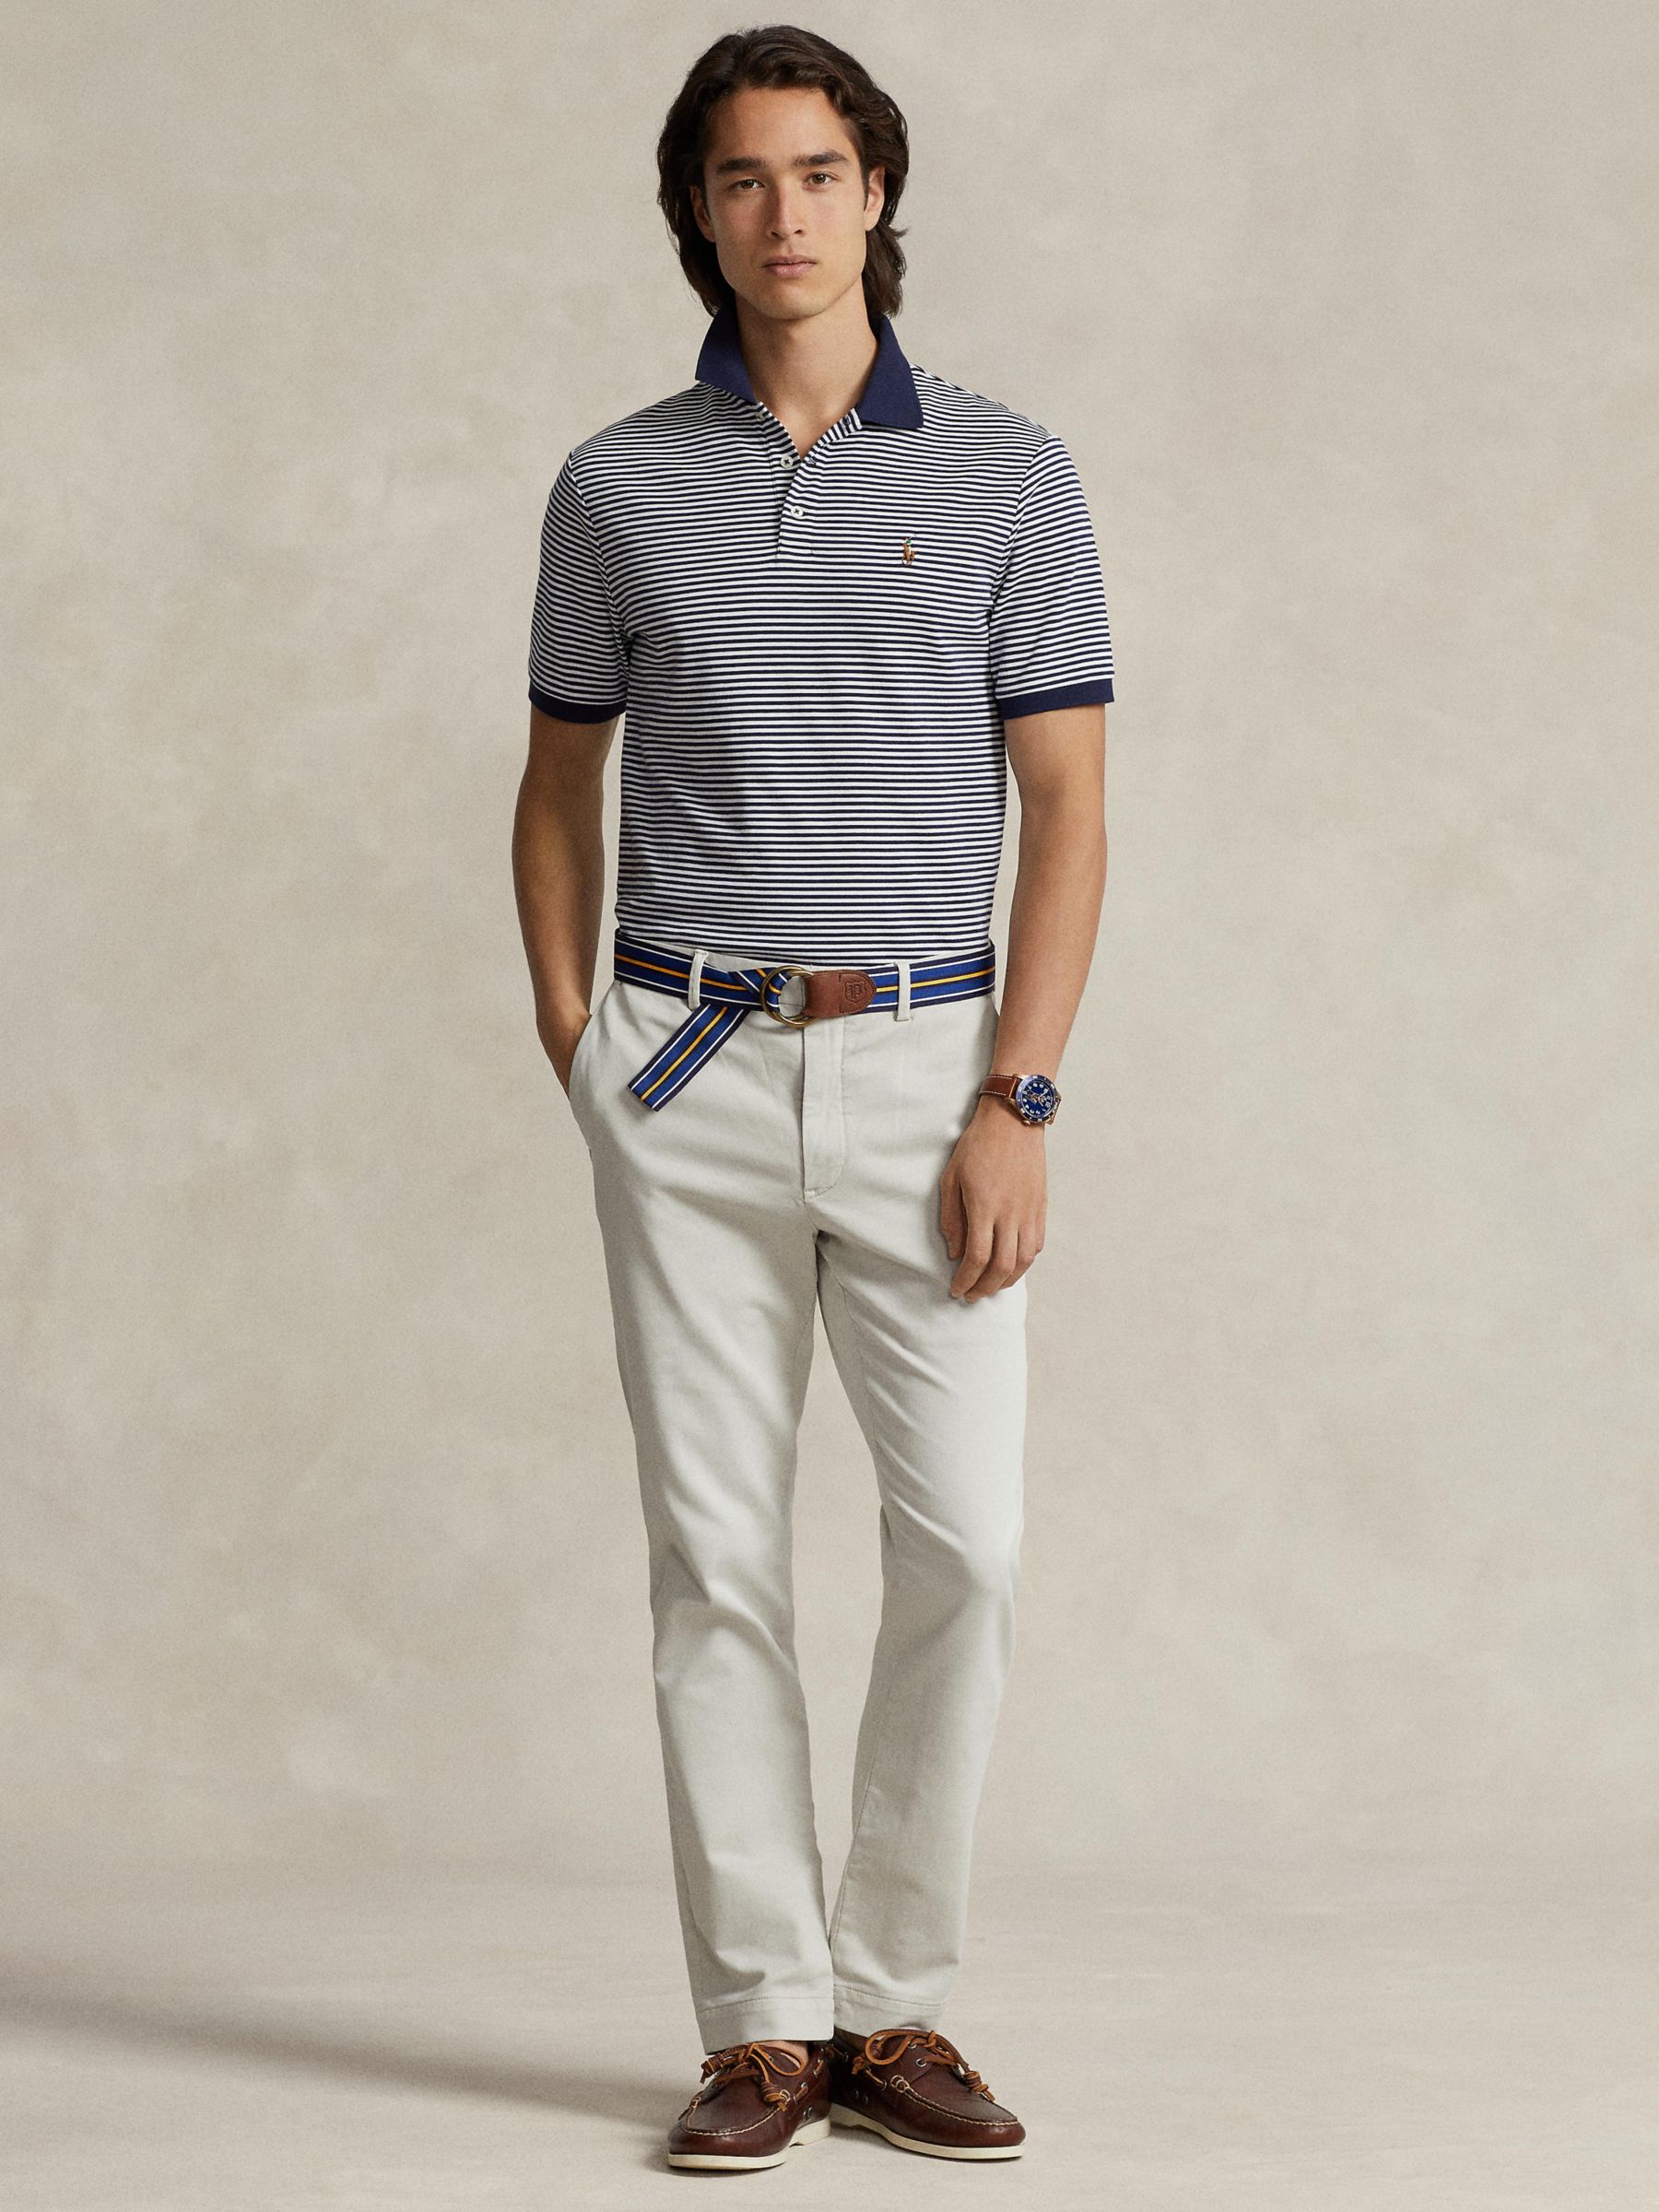 Polo Ralph Lauren Short Sleeve Striped Polo Shirt, Refined Navy/White, S